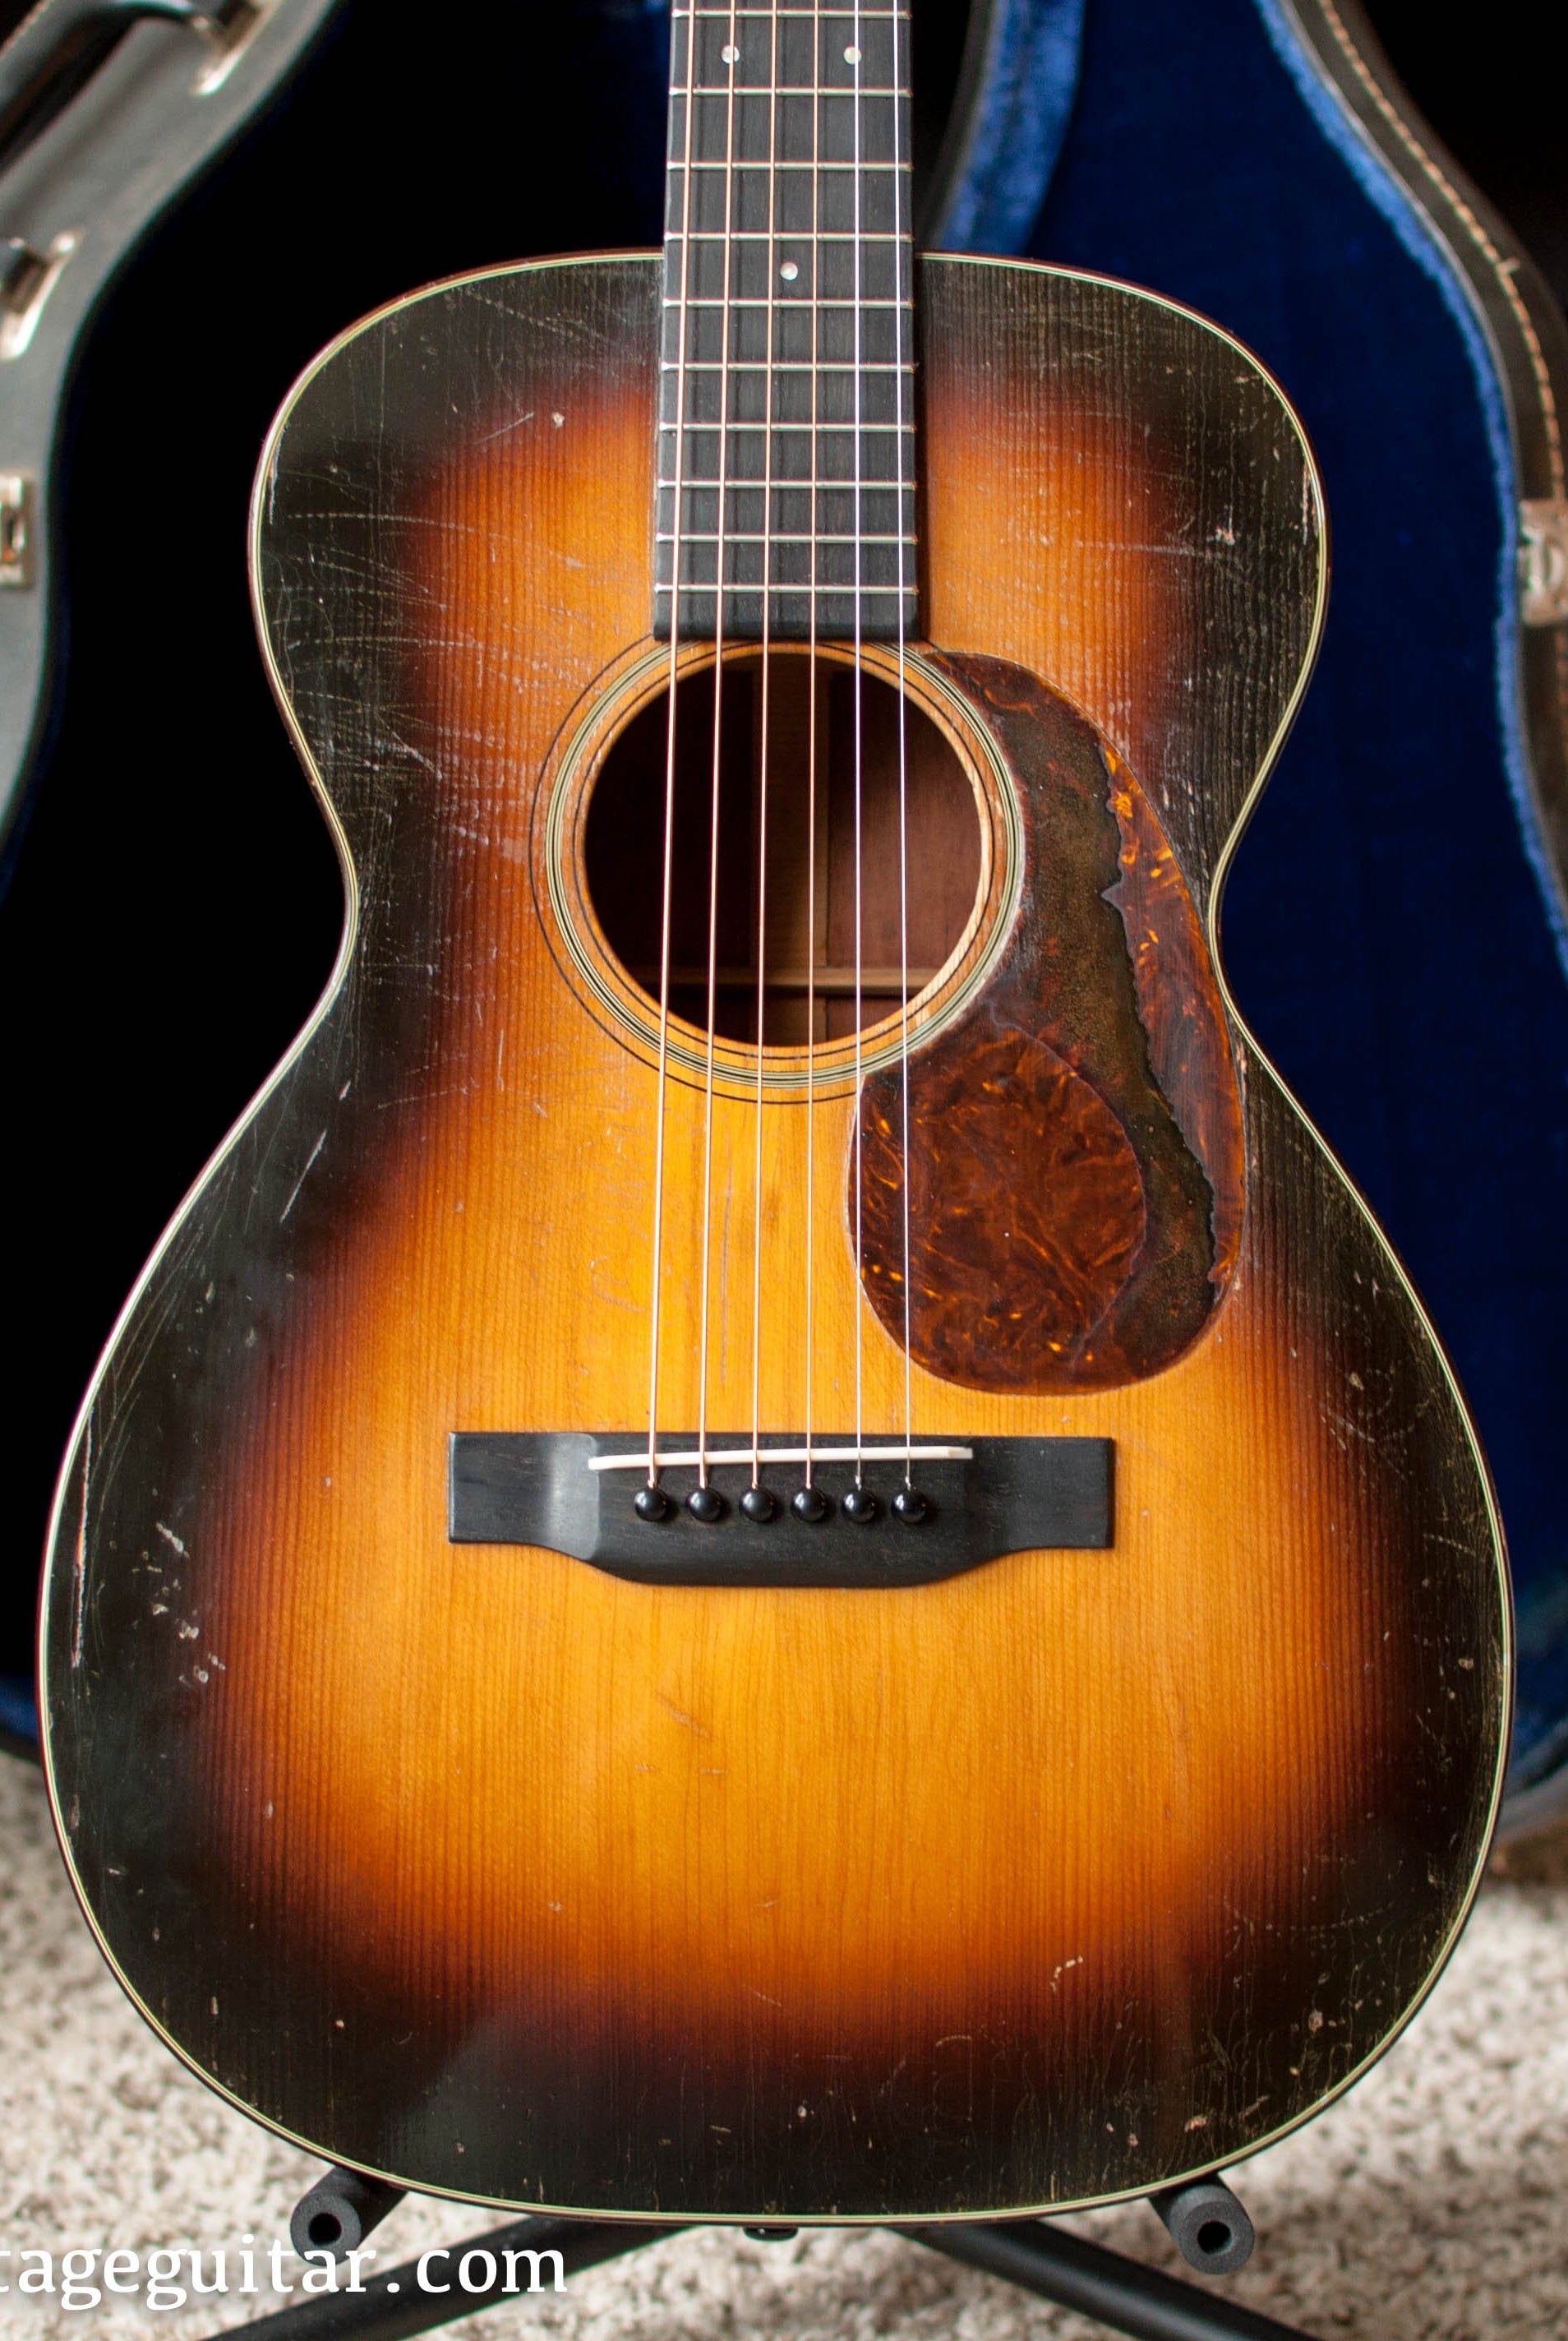 Vintage 1937 Martin Shade top Sunburst guitar